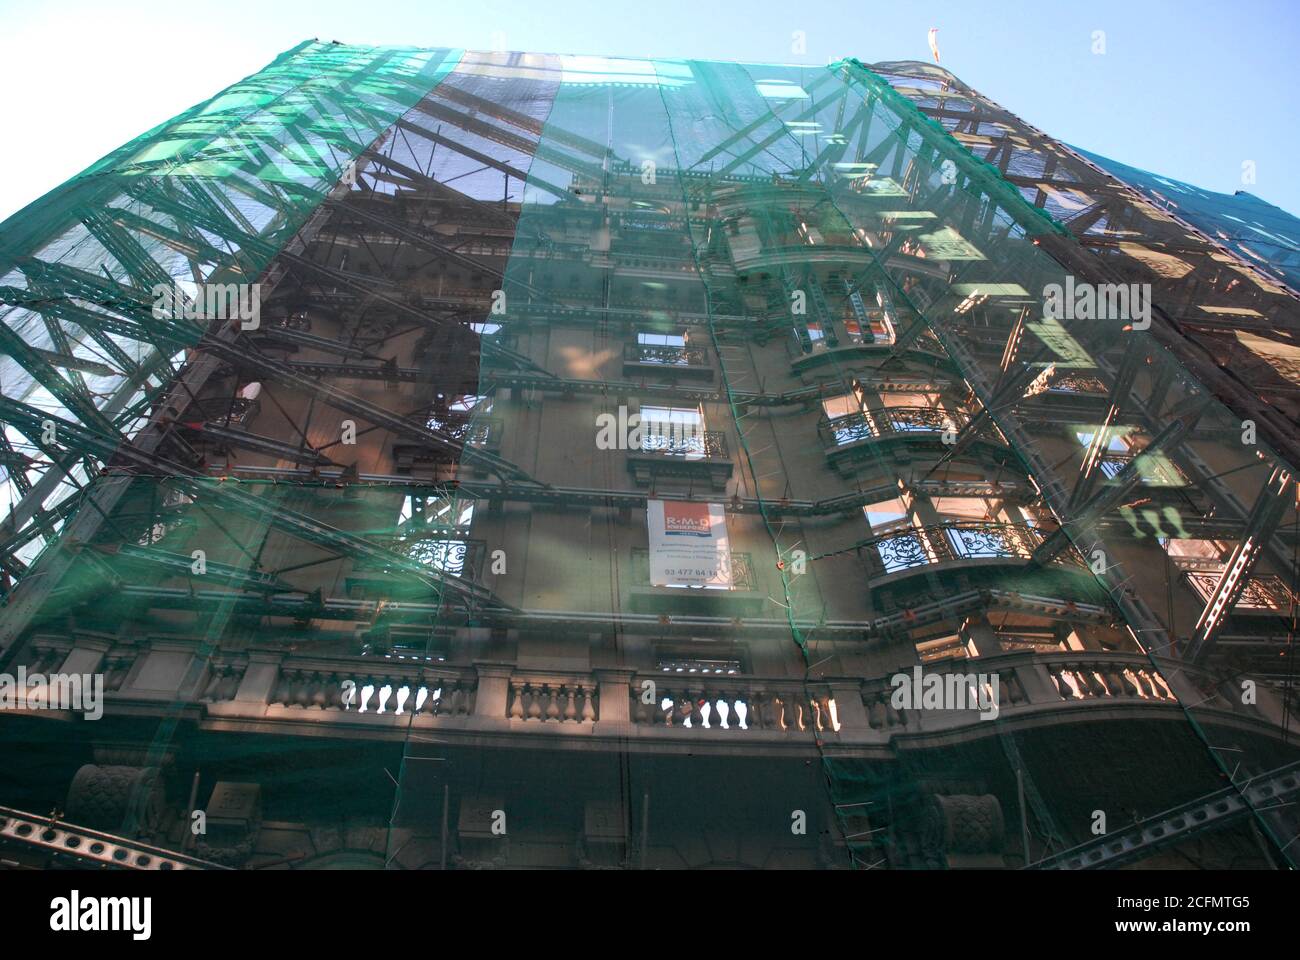 roof beams supporting a building facade under construction Ohla Hotel Via  Layetana, Barcelona, Stock Photo